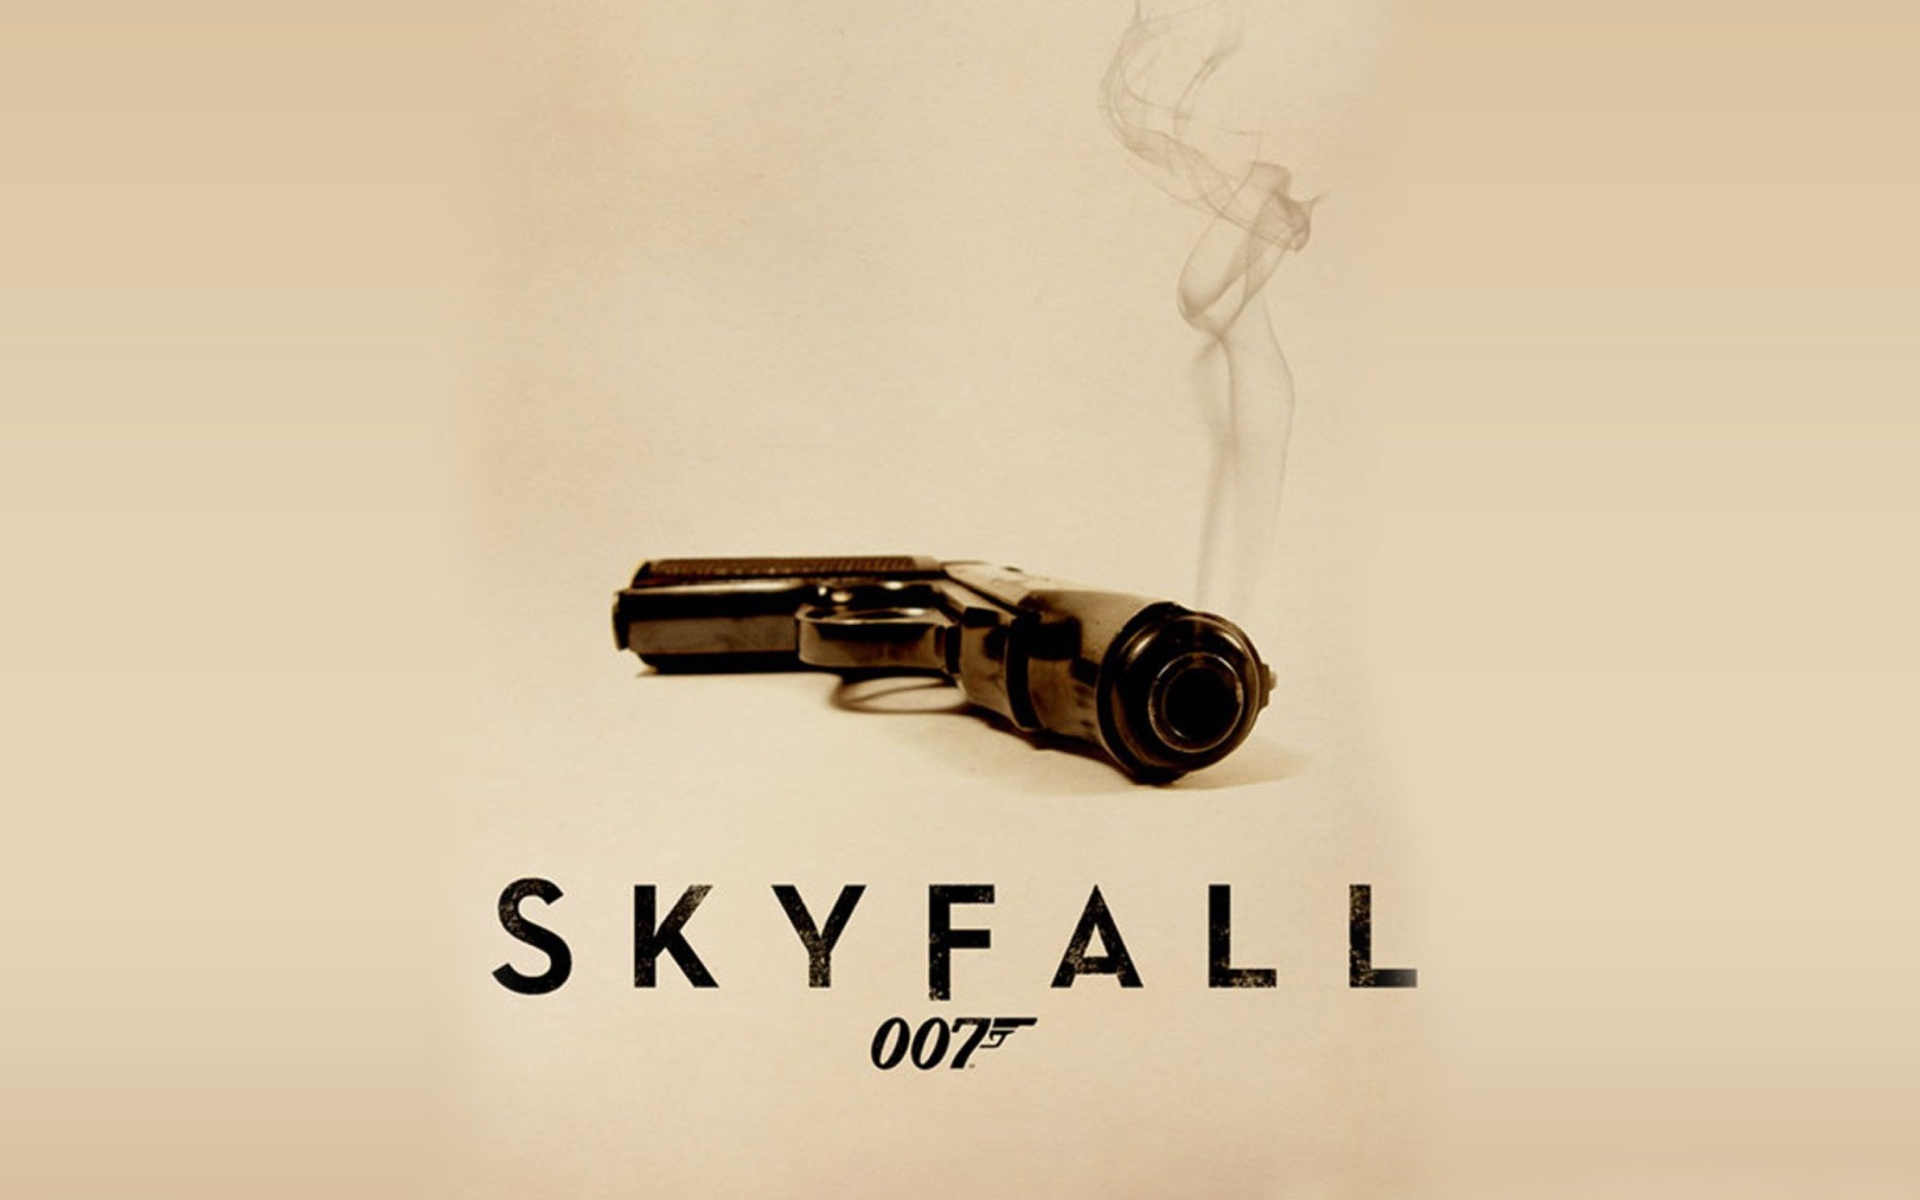 Skyfall: Stars Daniel Craig as Bond, Judi Dench as M and Javier Bardem as Silva. 1920x1200 HD Wallpaper.